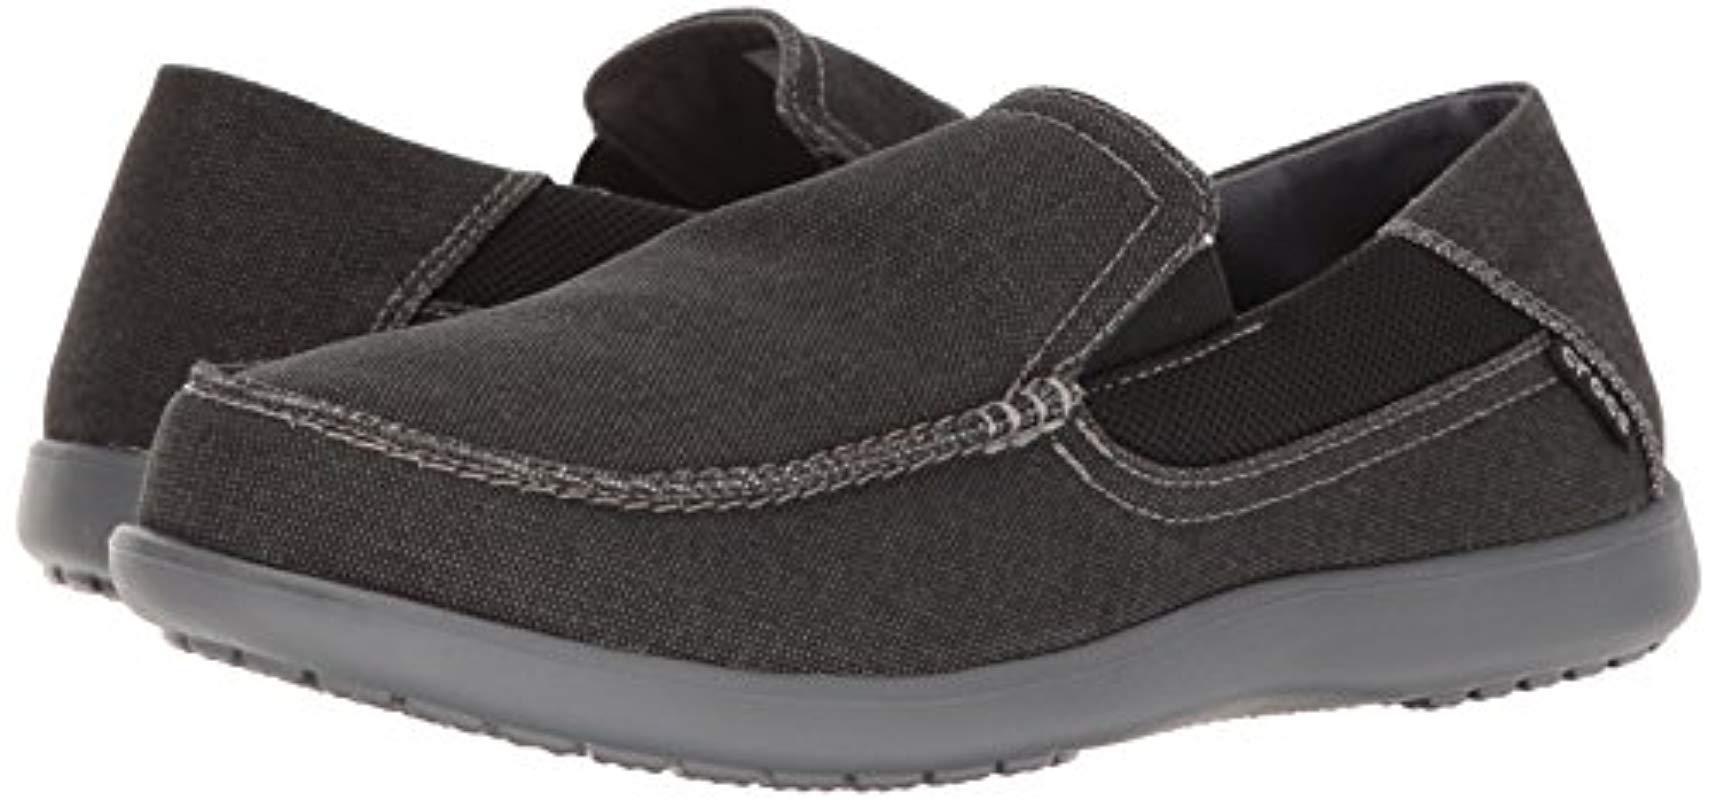 Crocs Mens Santa Cruz 2 Luxe Slip on Comfortable Loafers Slip-On